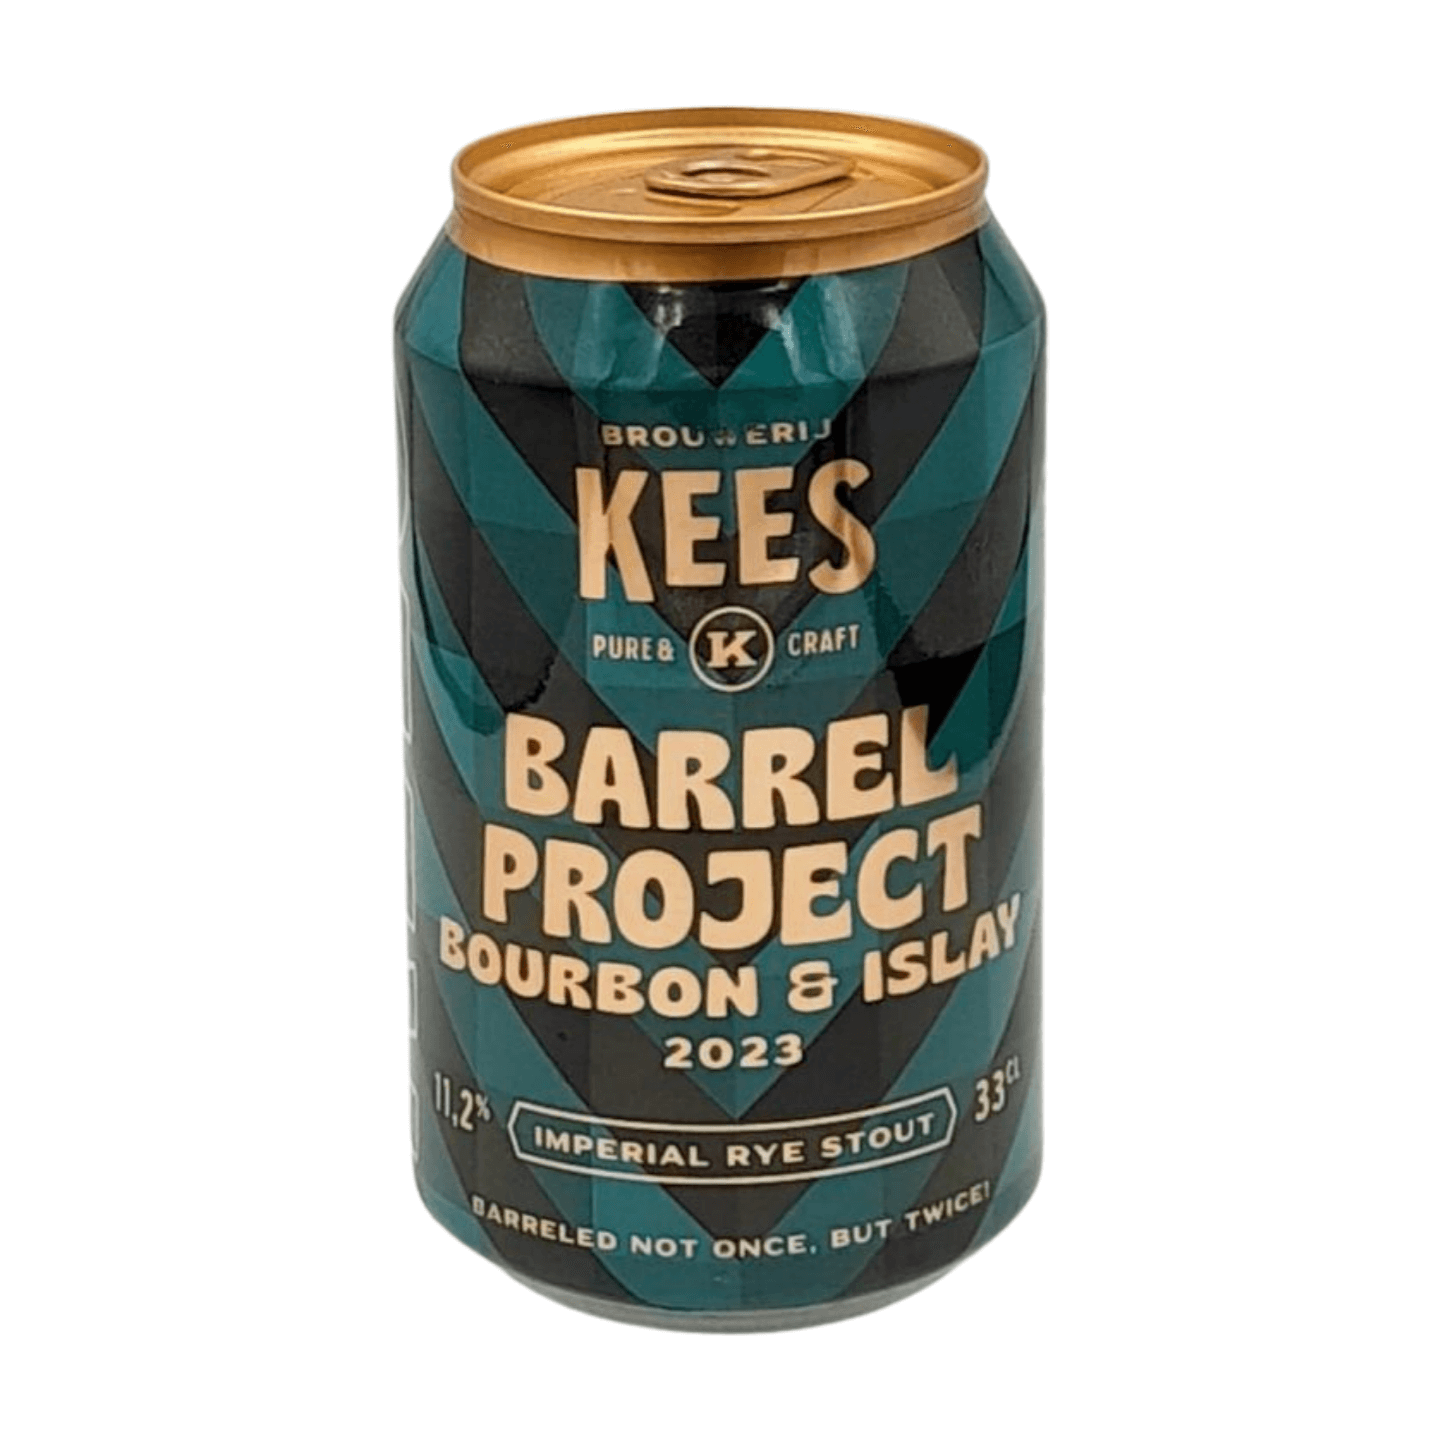 Kees Barrel Project Bourbon & Islay | Imperial Rye Stout Webshop Online Verdins Bierwinkel Rotterdam